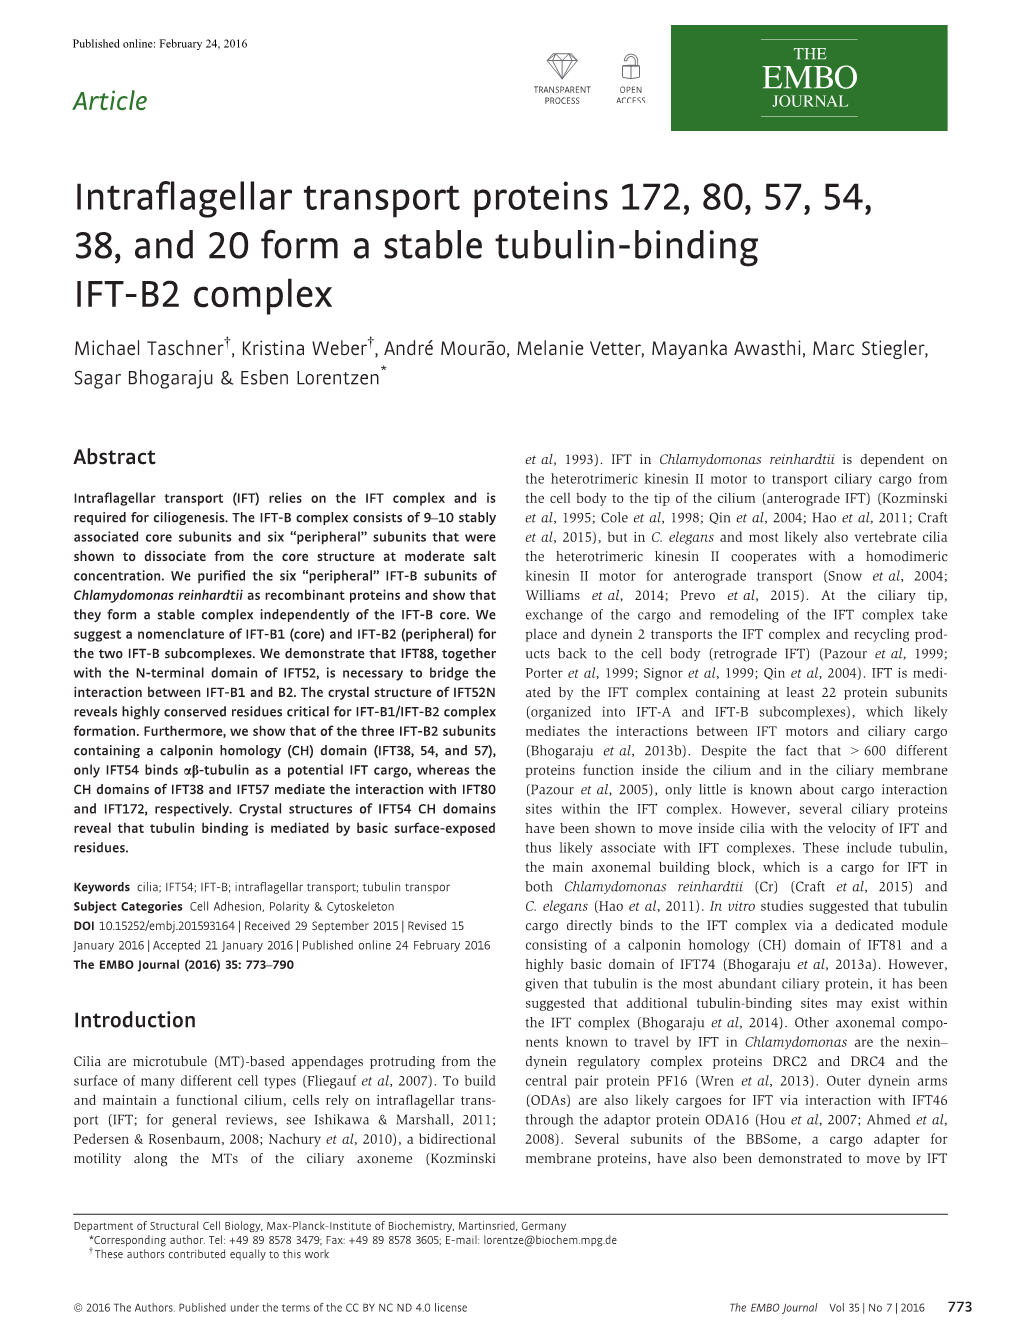 Intraflagellar Transport Proteins 172, 80, 57, 54, 38,&#Xa0